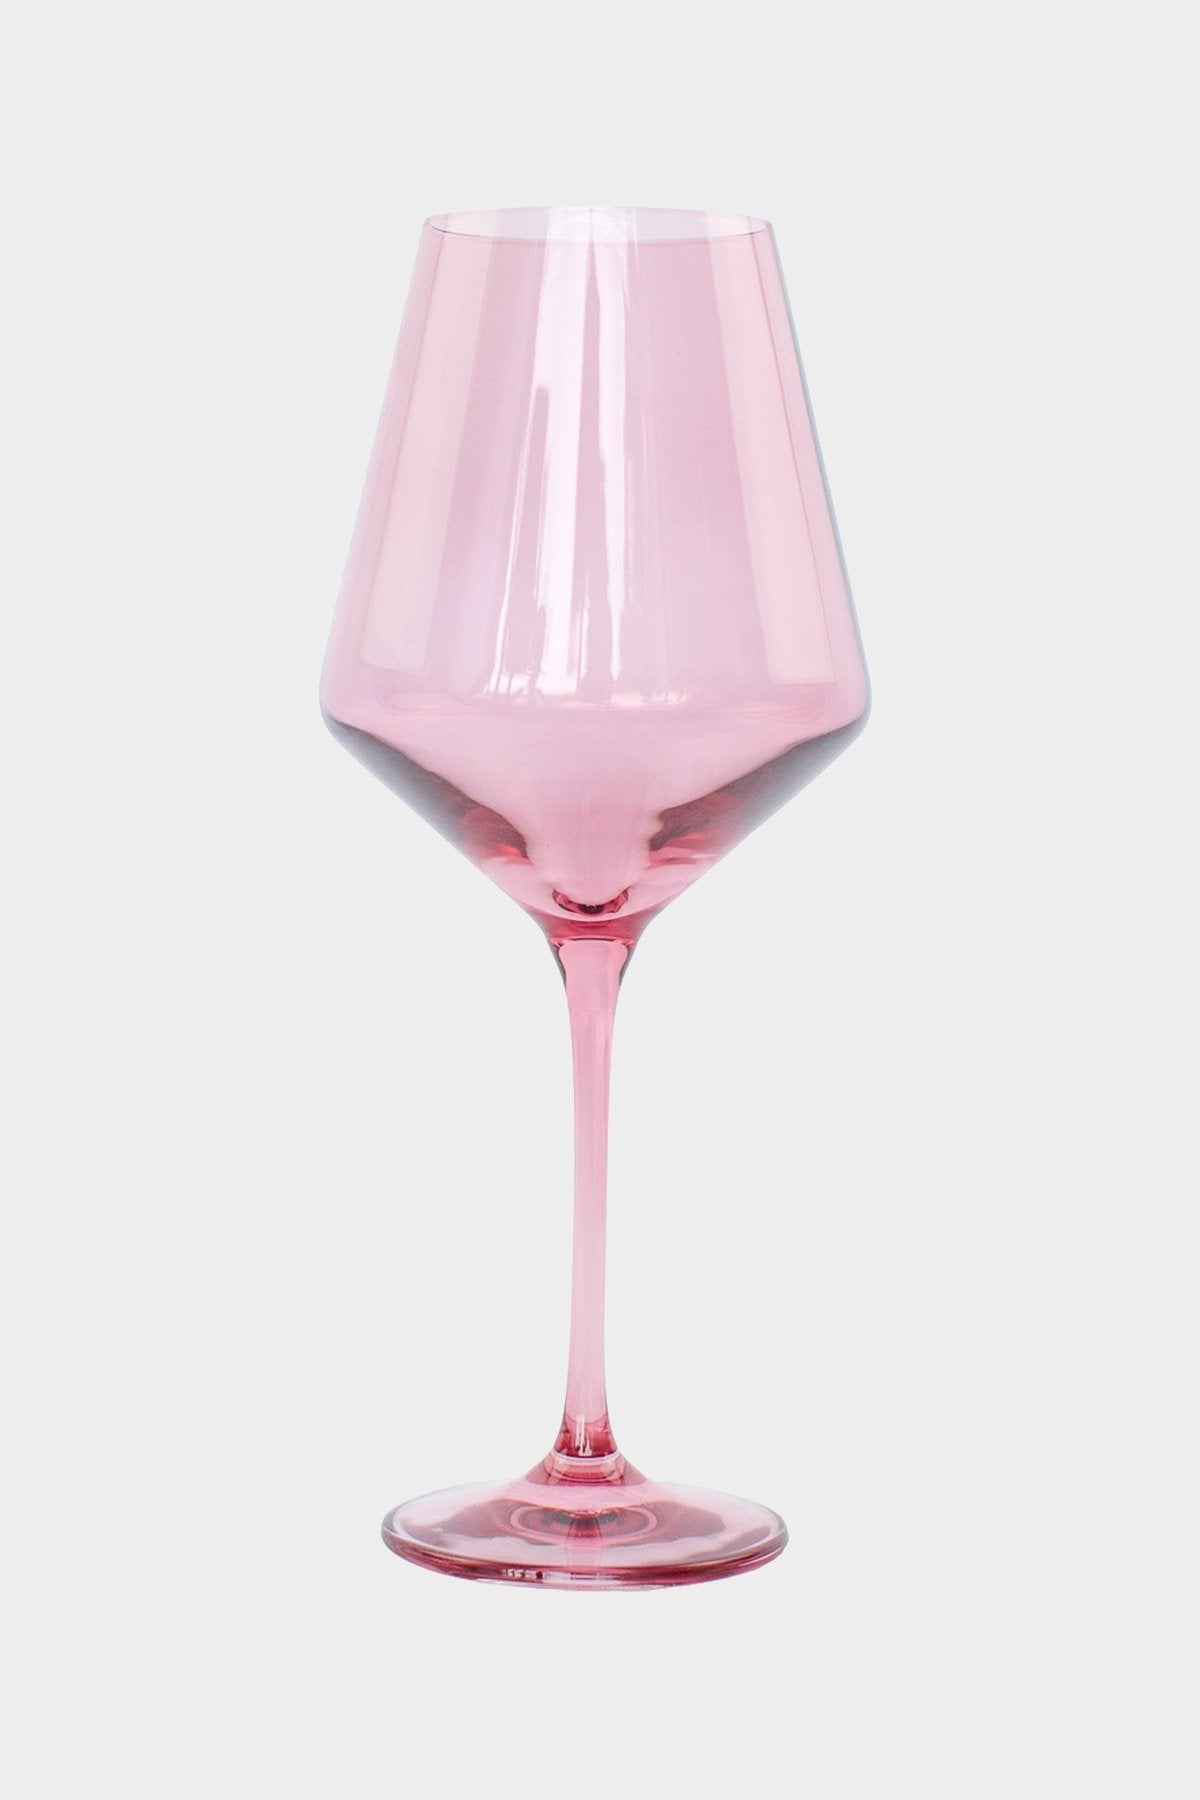 Wine Stemware Glass in Rose - Set of 6 - shop-olivia.com